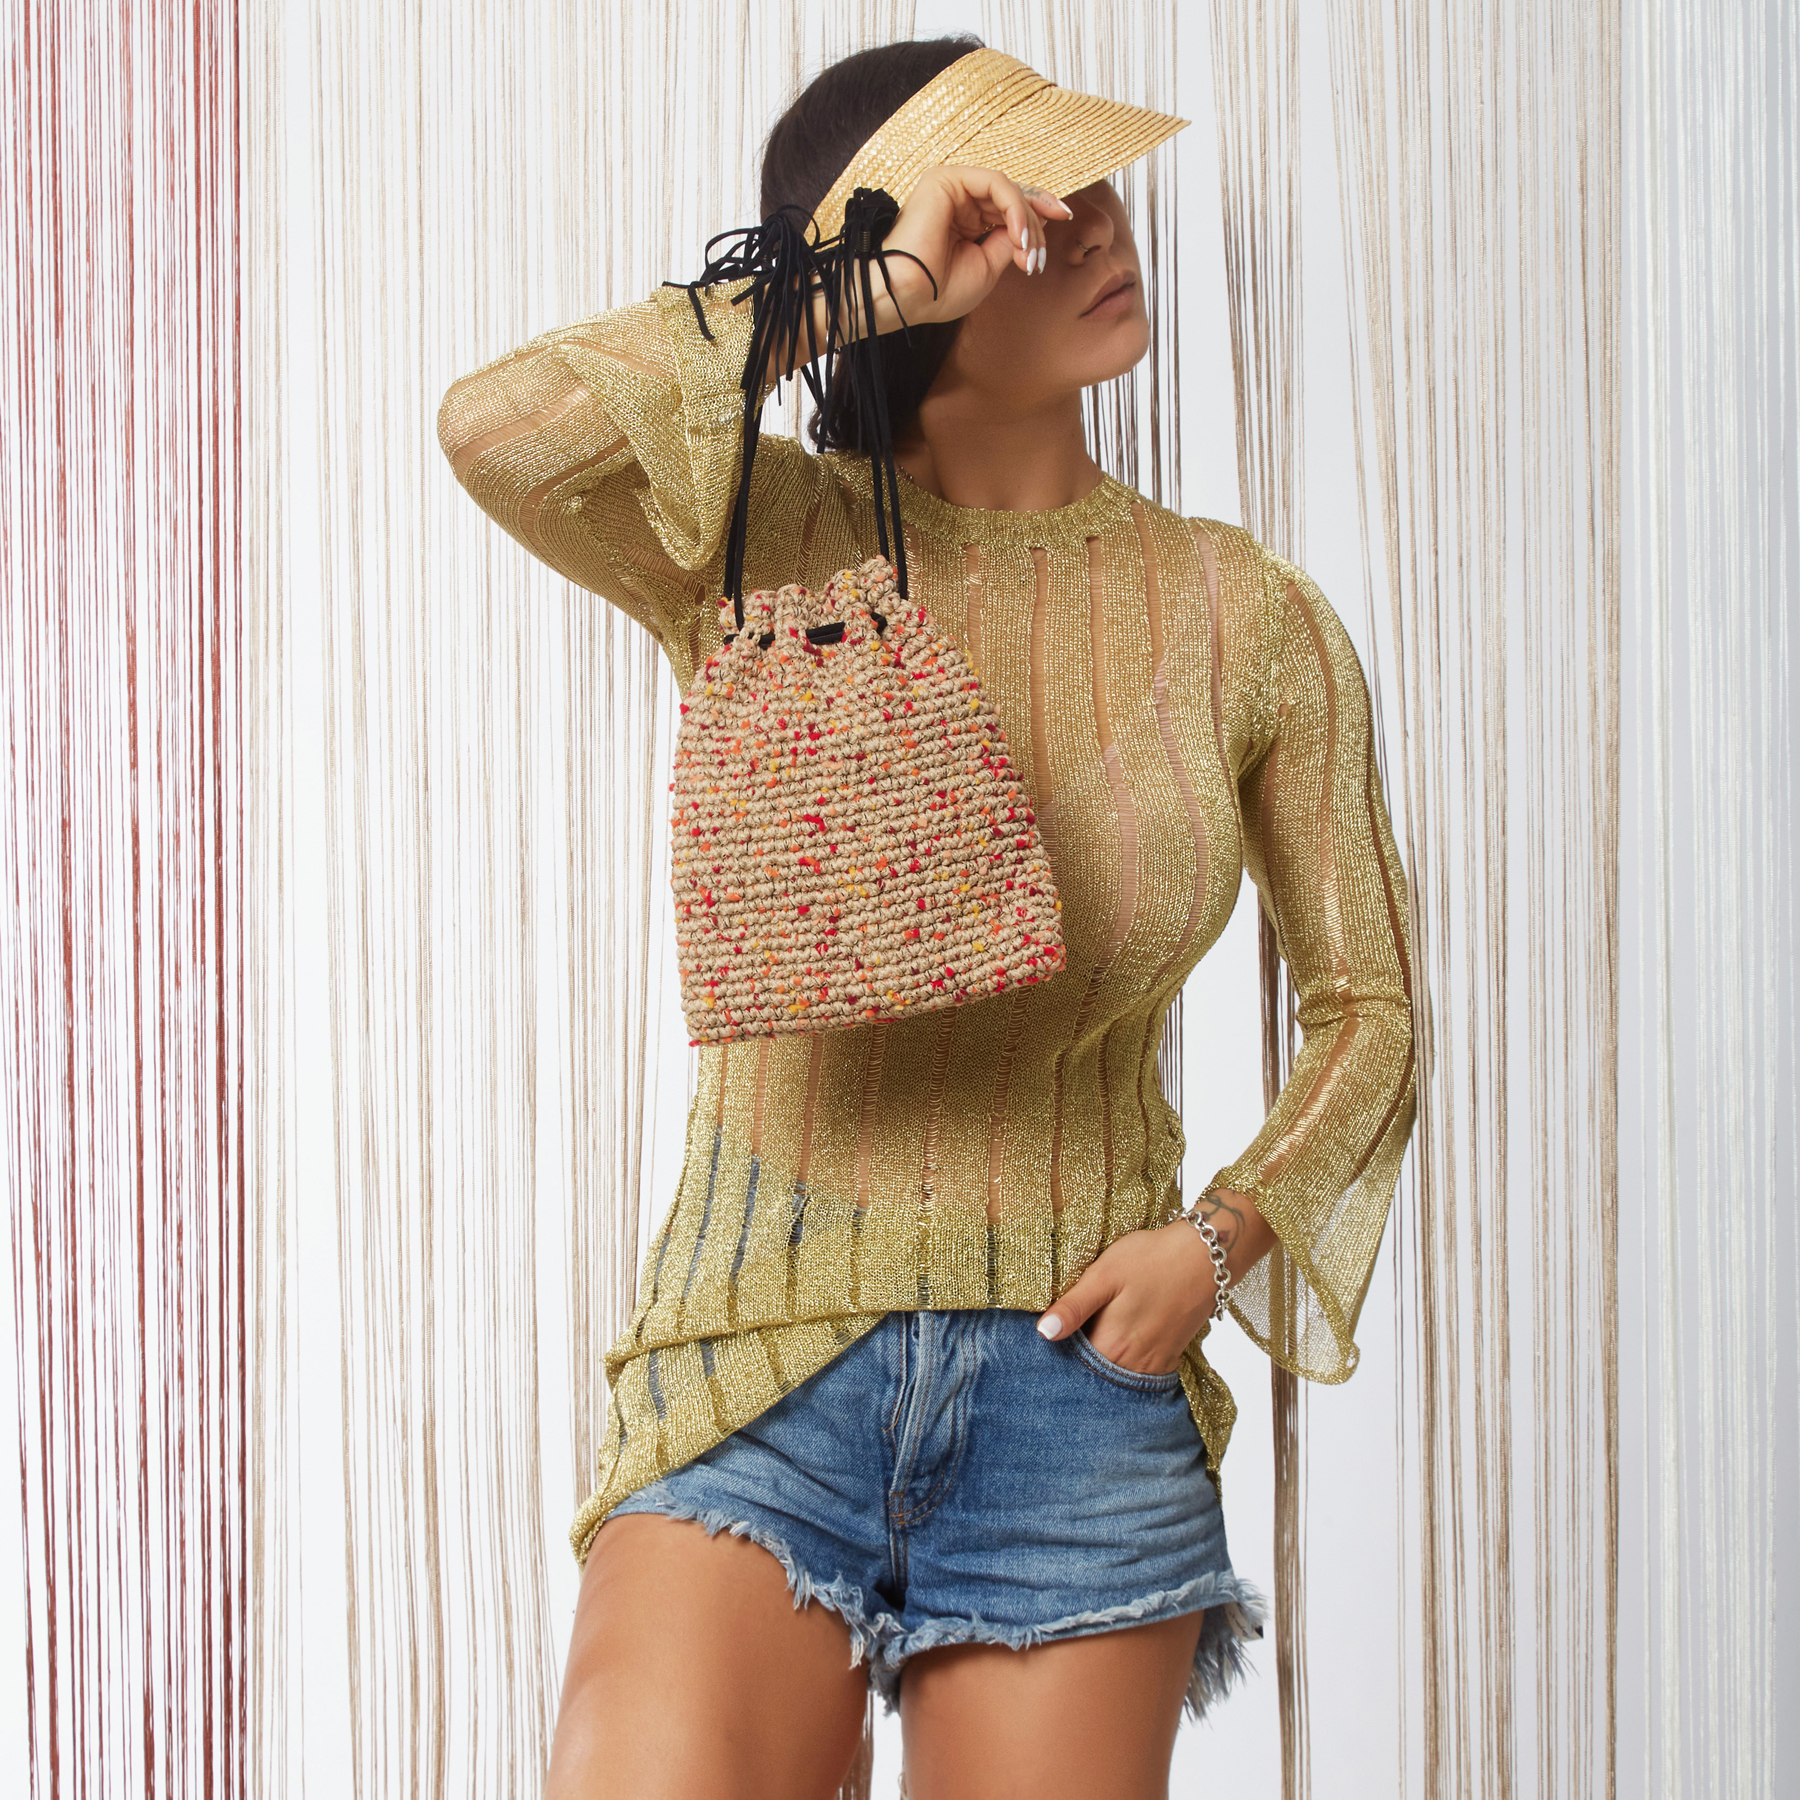 girl hols a mini handmade pouch crochet bag in sand beige color